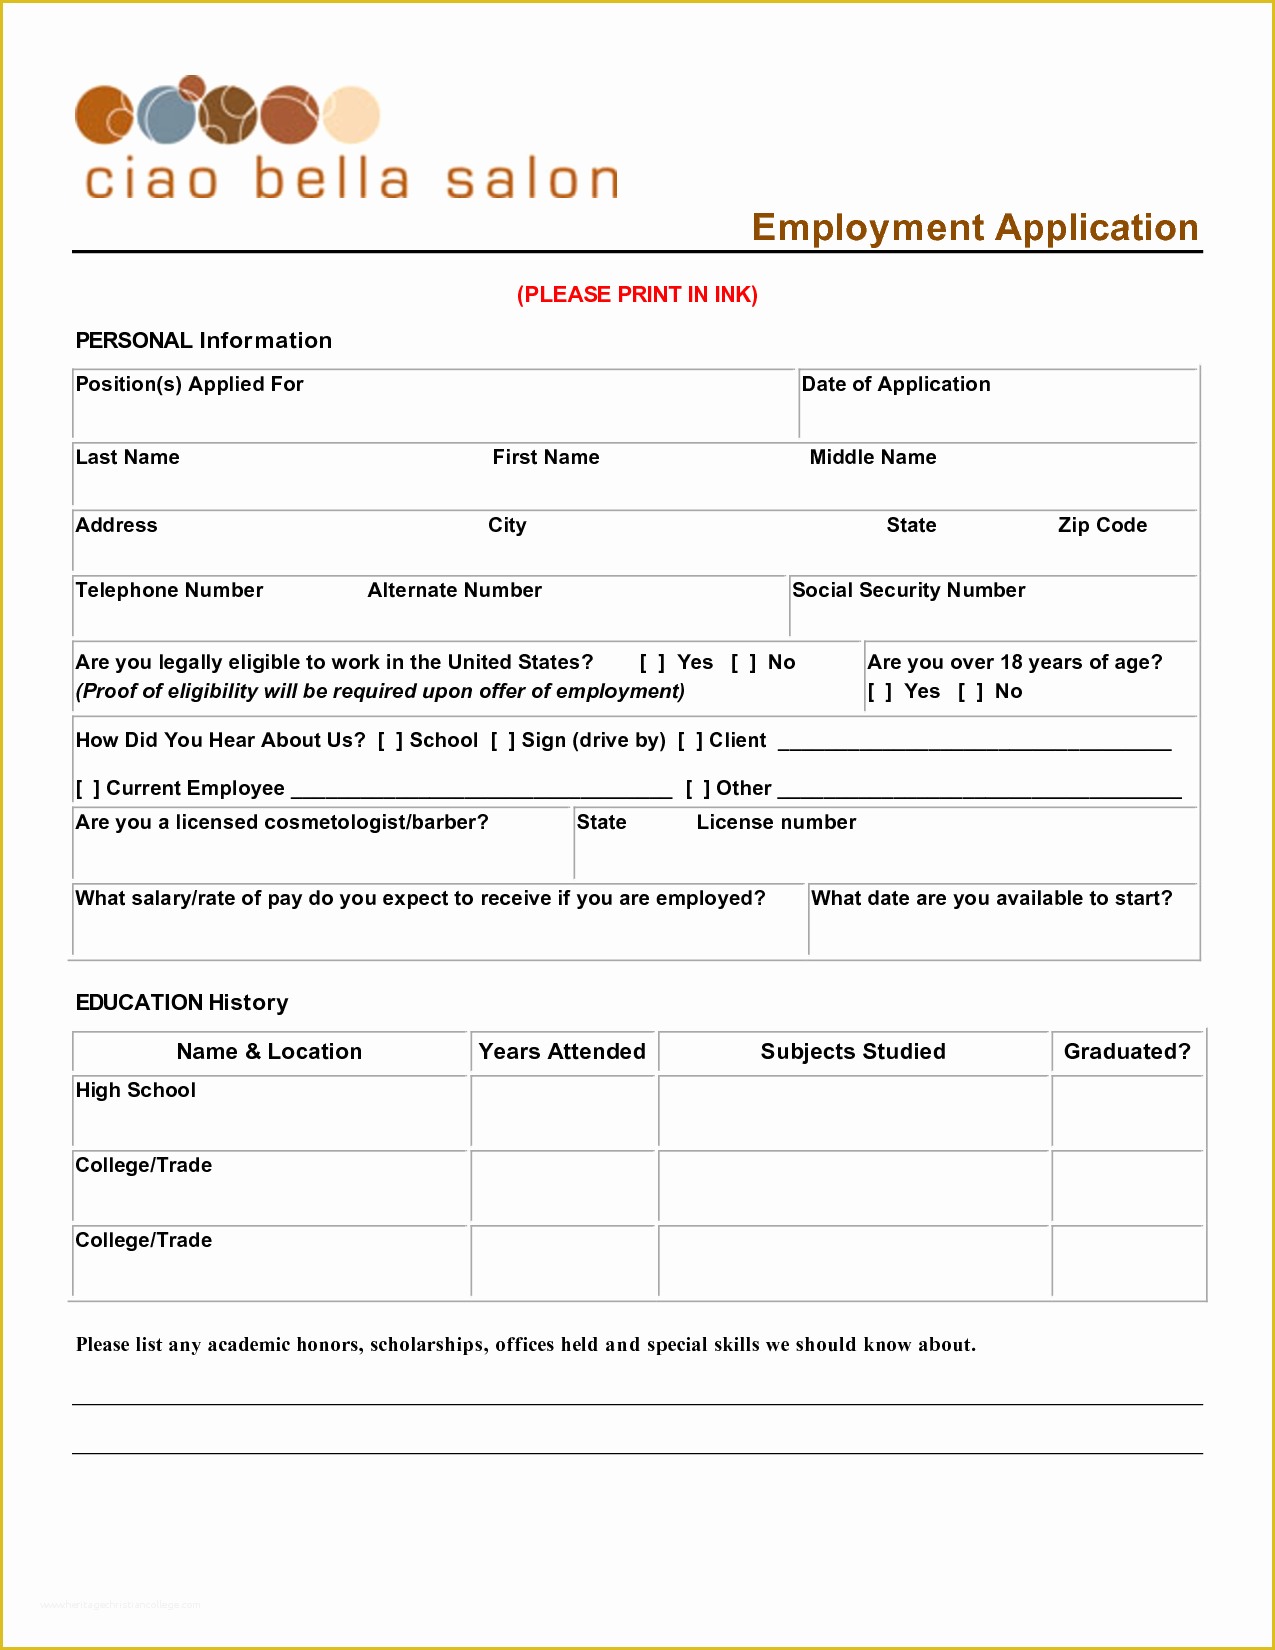 free-salon-application-template-of-free-salon-employment-application